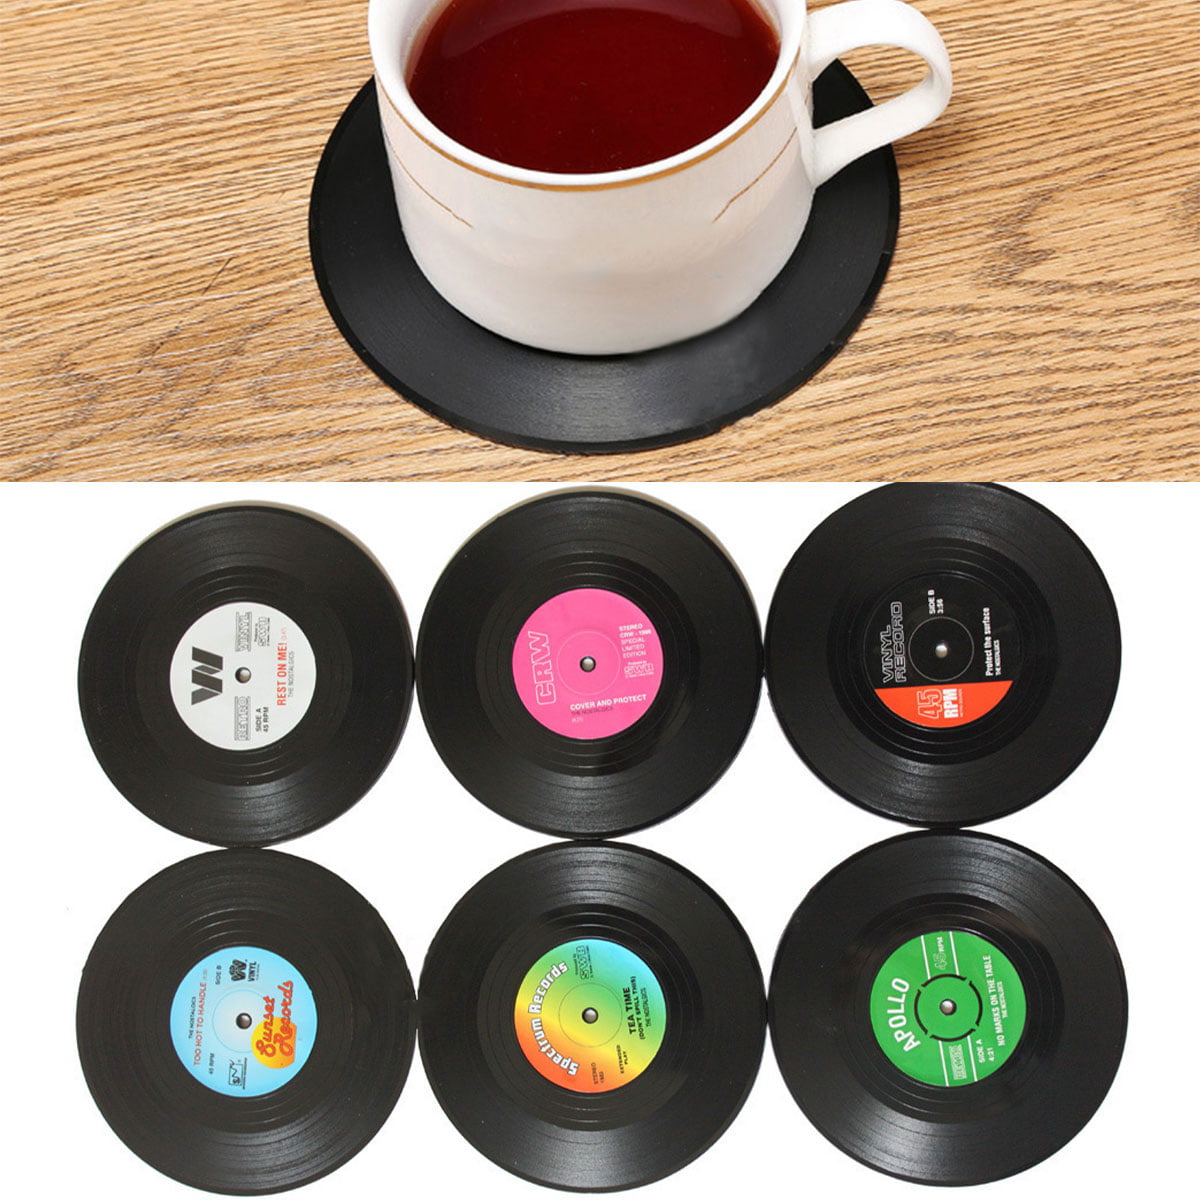 Round Silicone Coasters Non Slip Cup Mats Pad Drinking Coffee Tea Mug Coaster 